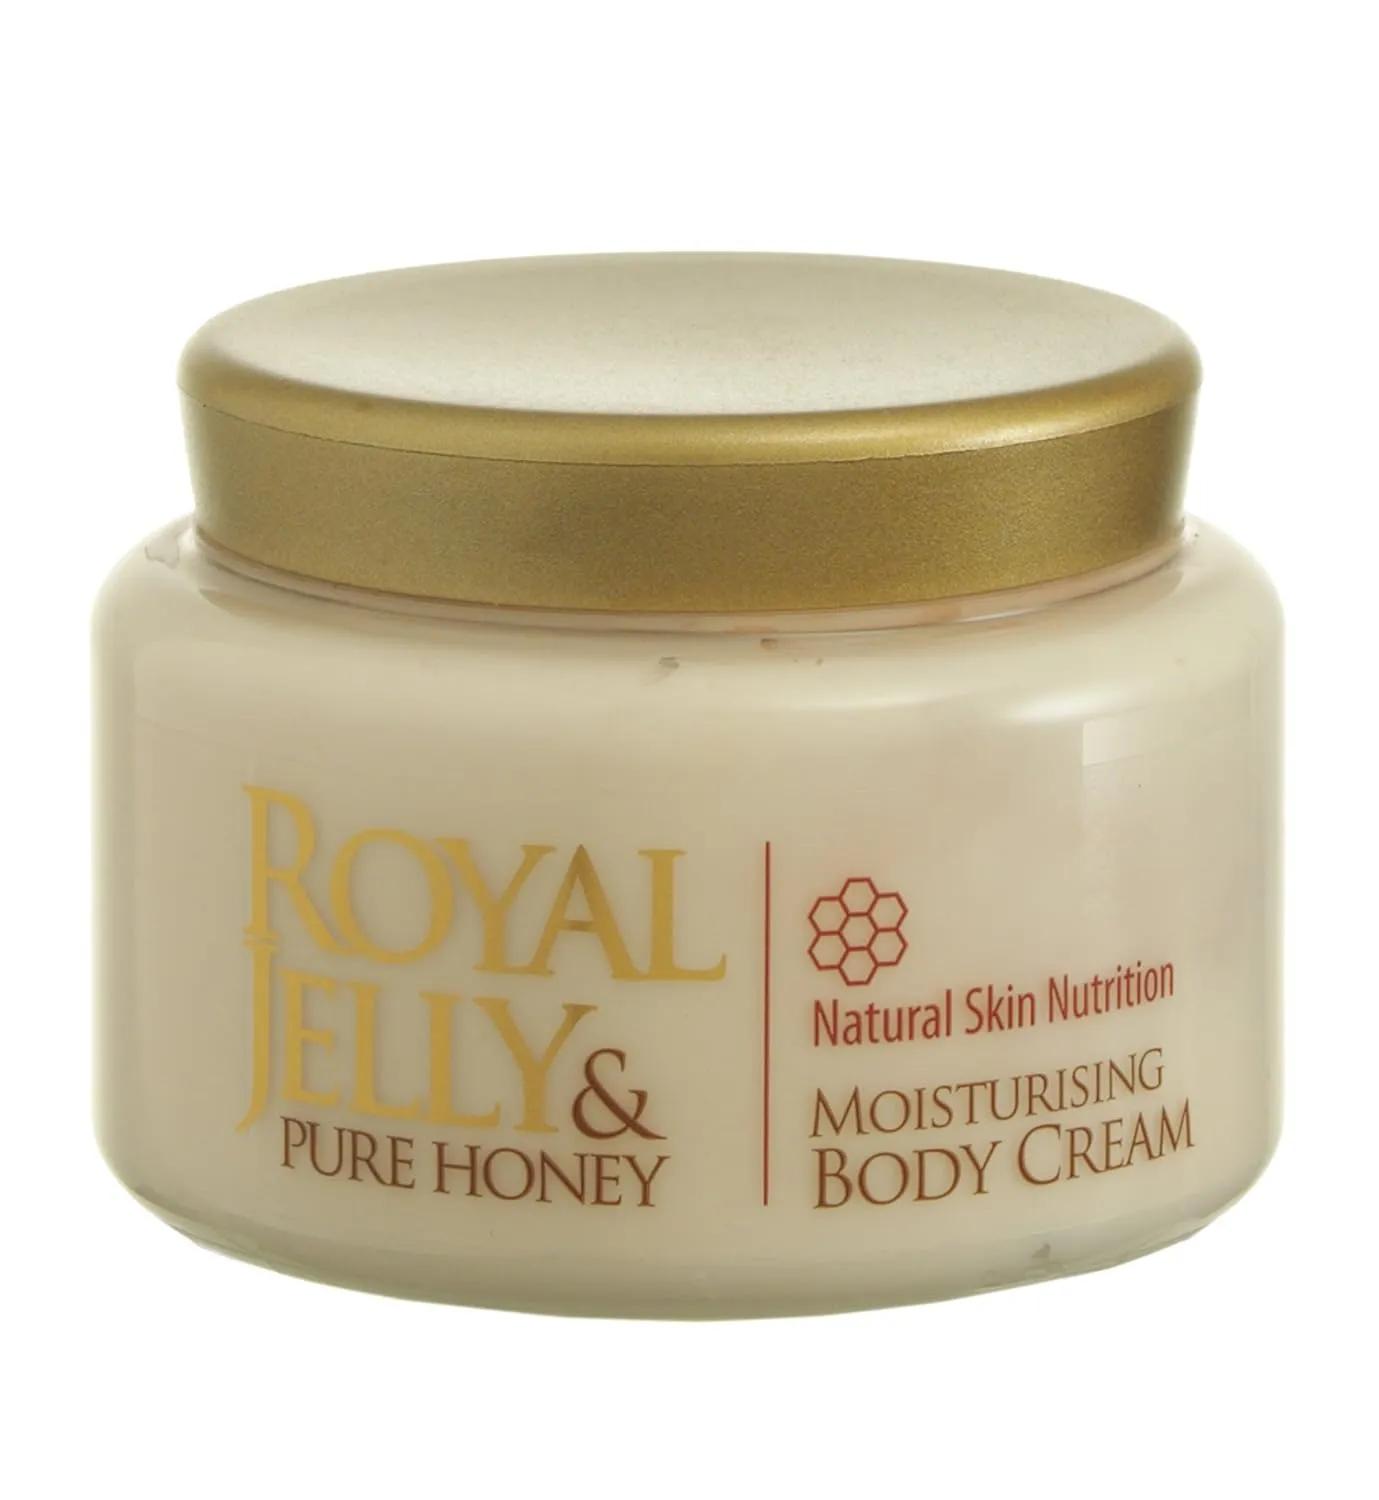 Royal Jelly &amp; Pure Honey Moisturising Body Cream: Amazon.co.uk: Beauty